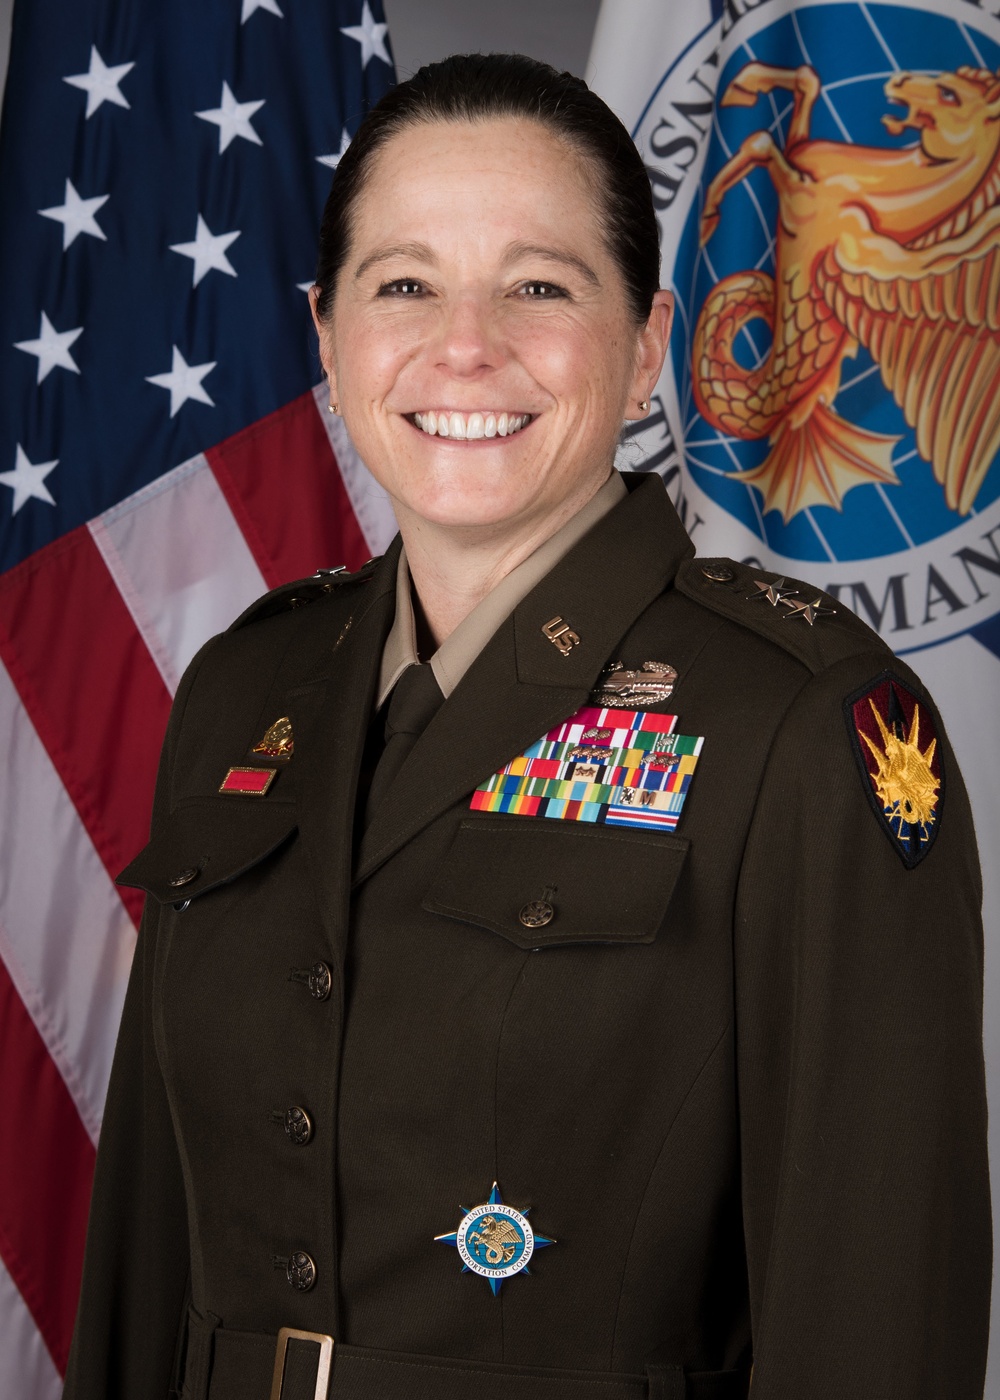 U.S. Transportation Command mobilization assistant, joint reserve unit commander recognized for promotion to major general